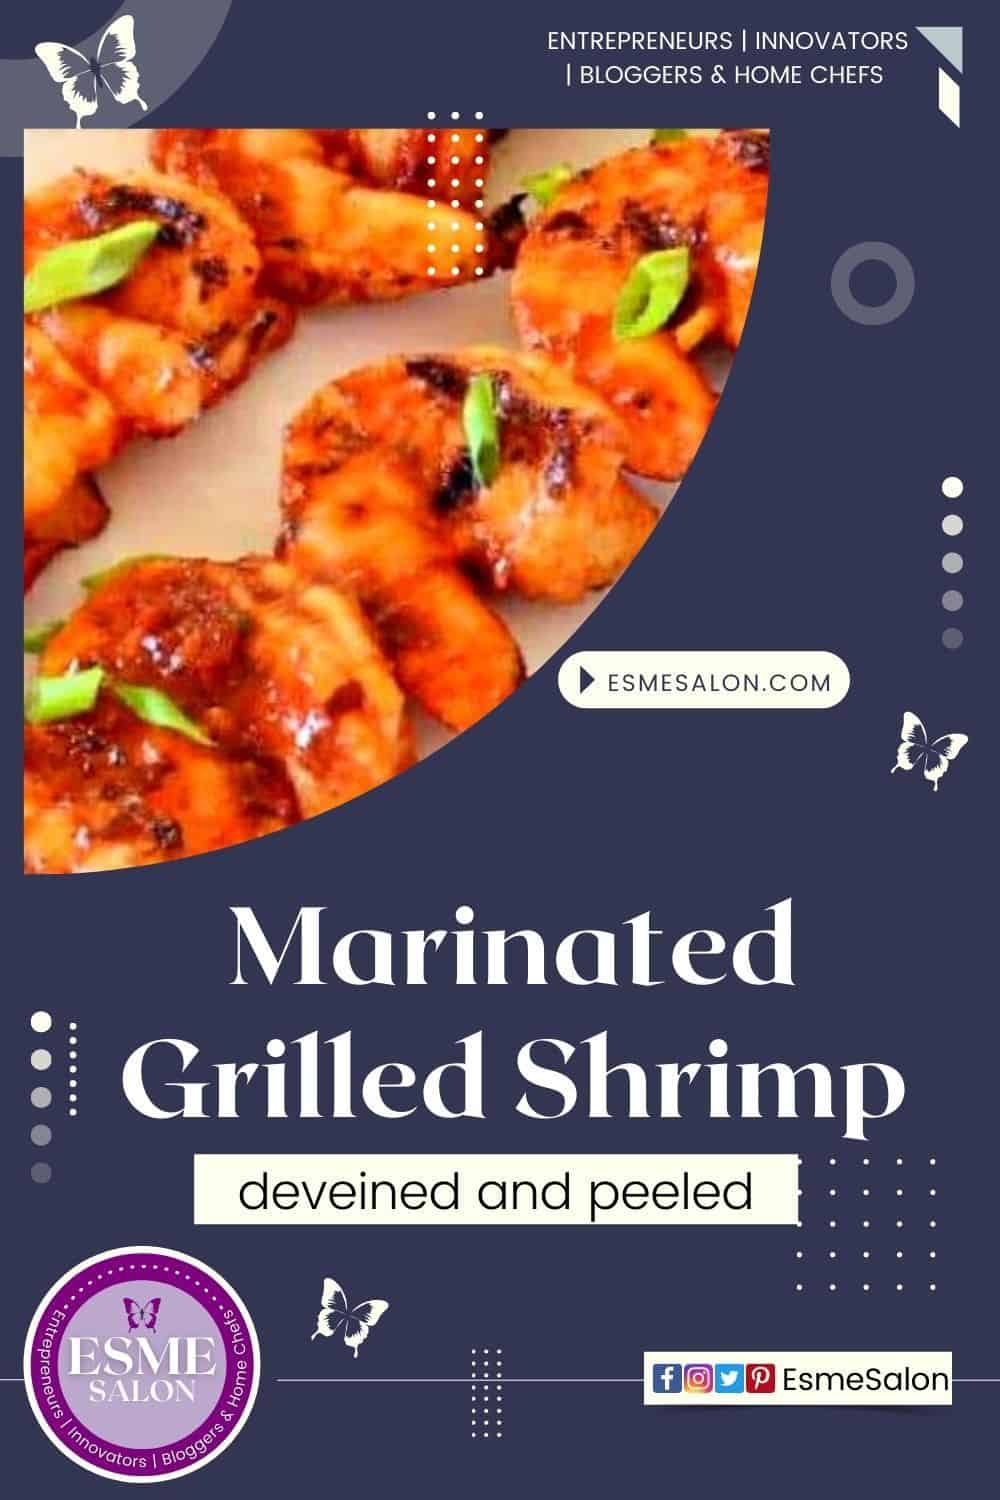 Marinated Grilled Shrimp deveined